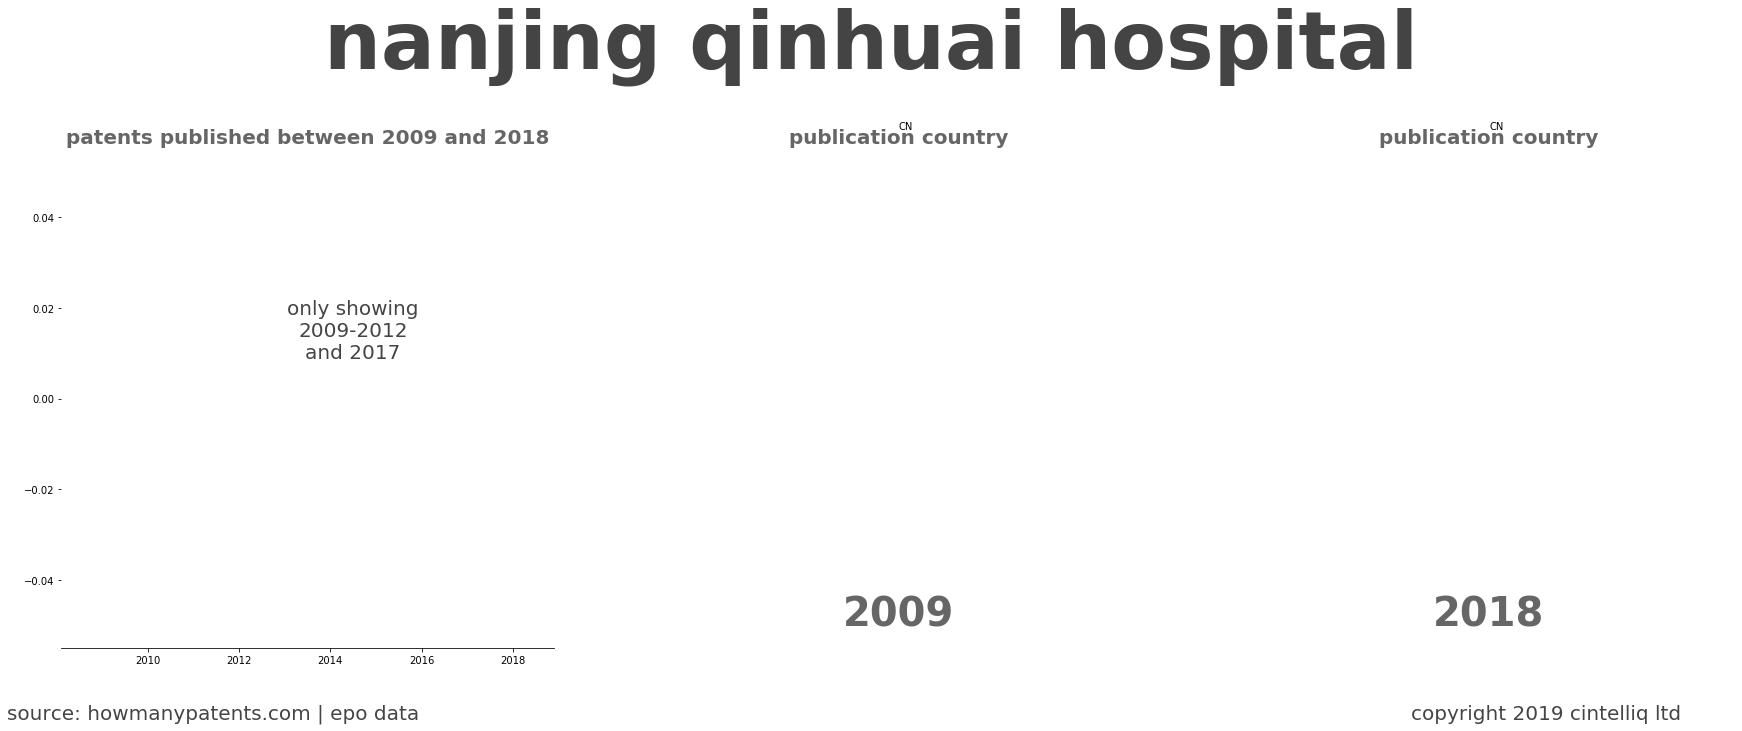 summary of patents for Nanjing Qinhuai Hospital